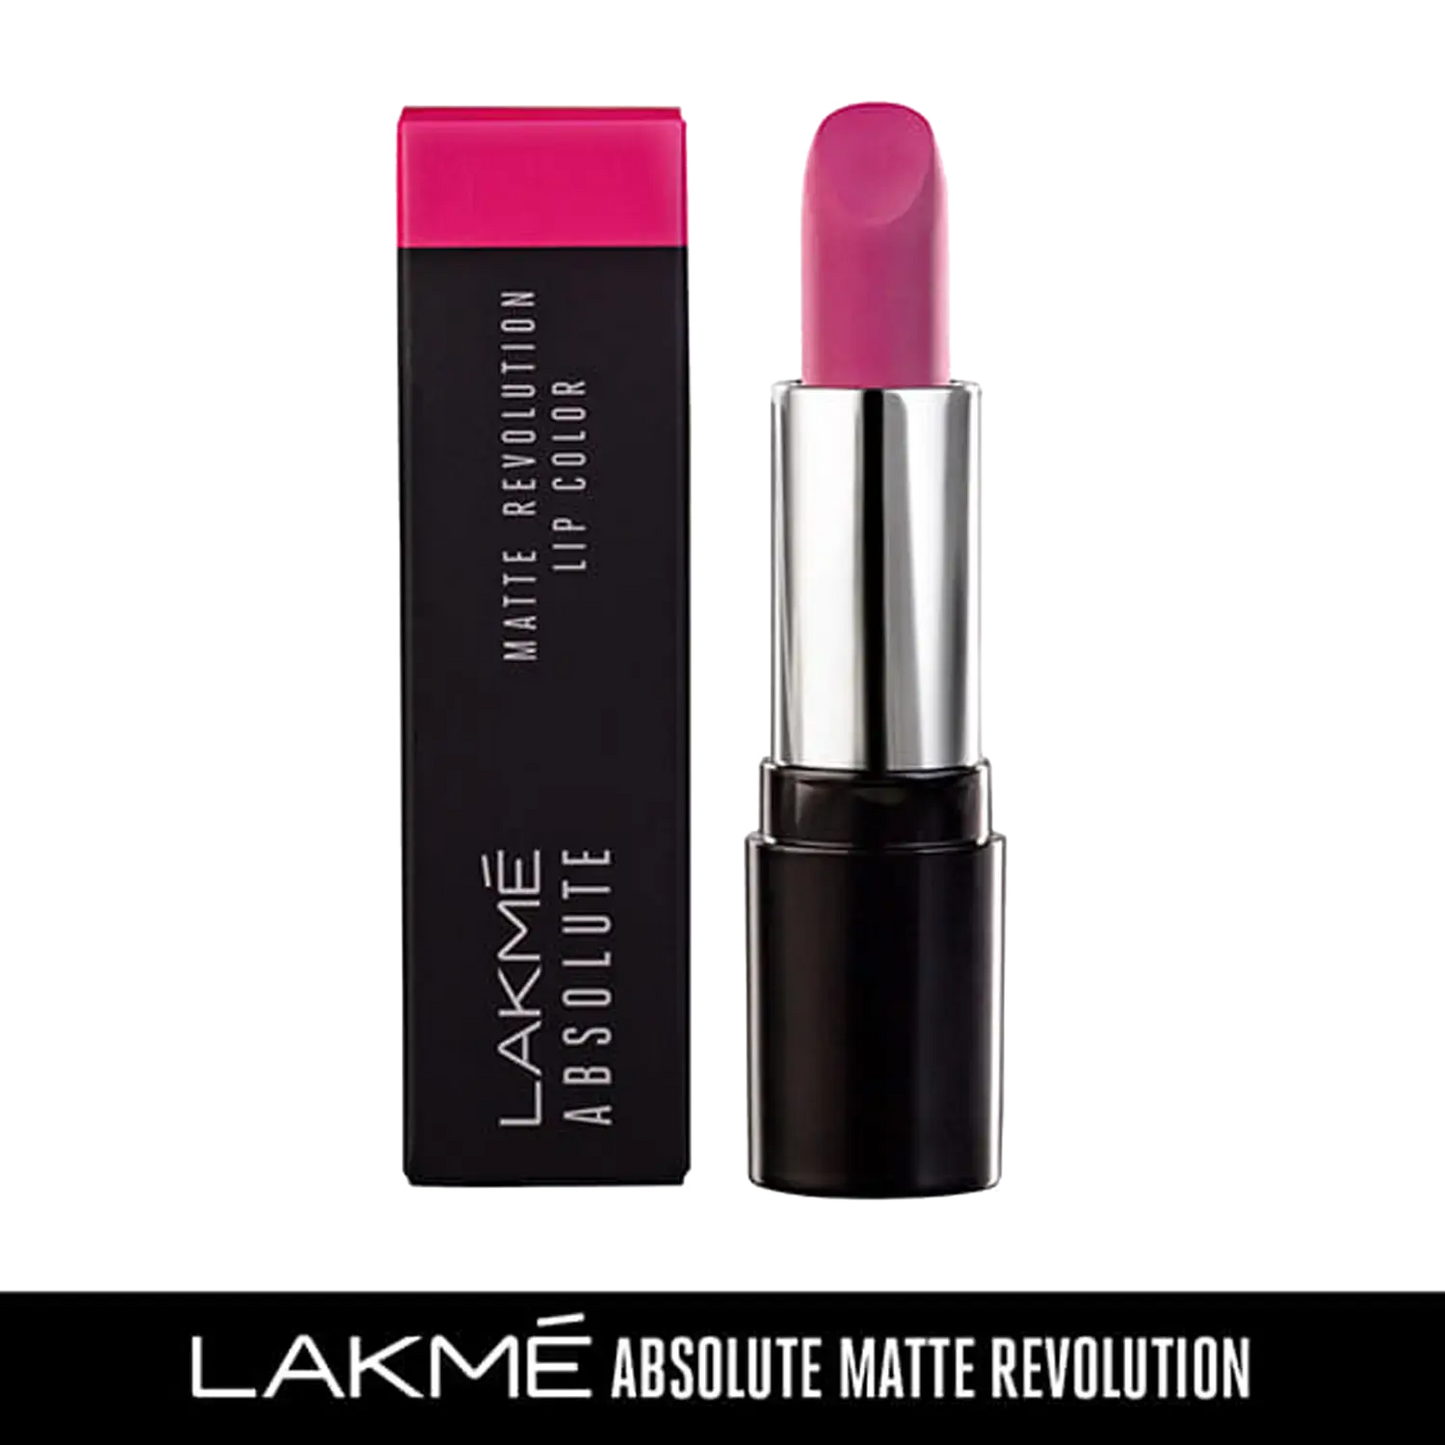 Lakme Absolute Matte Revolution Lip Color - 201 Insane Pink (3.5g)